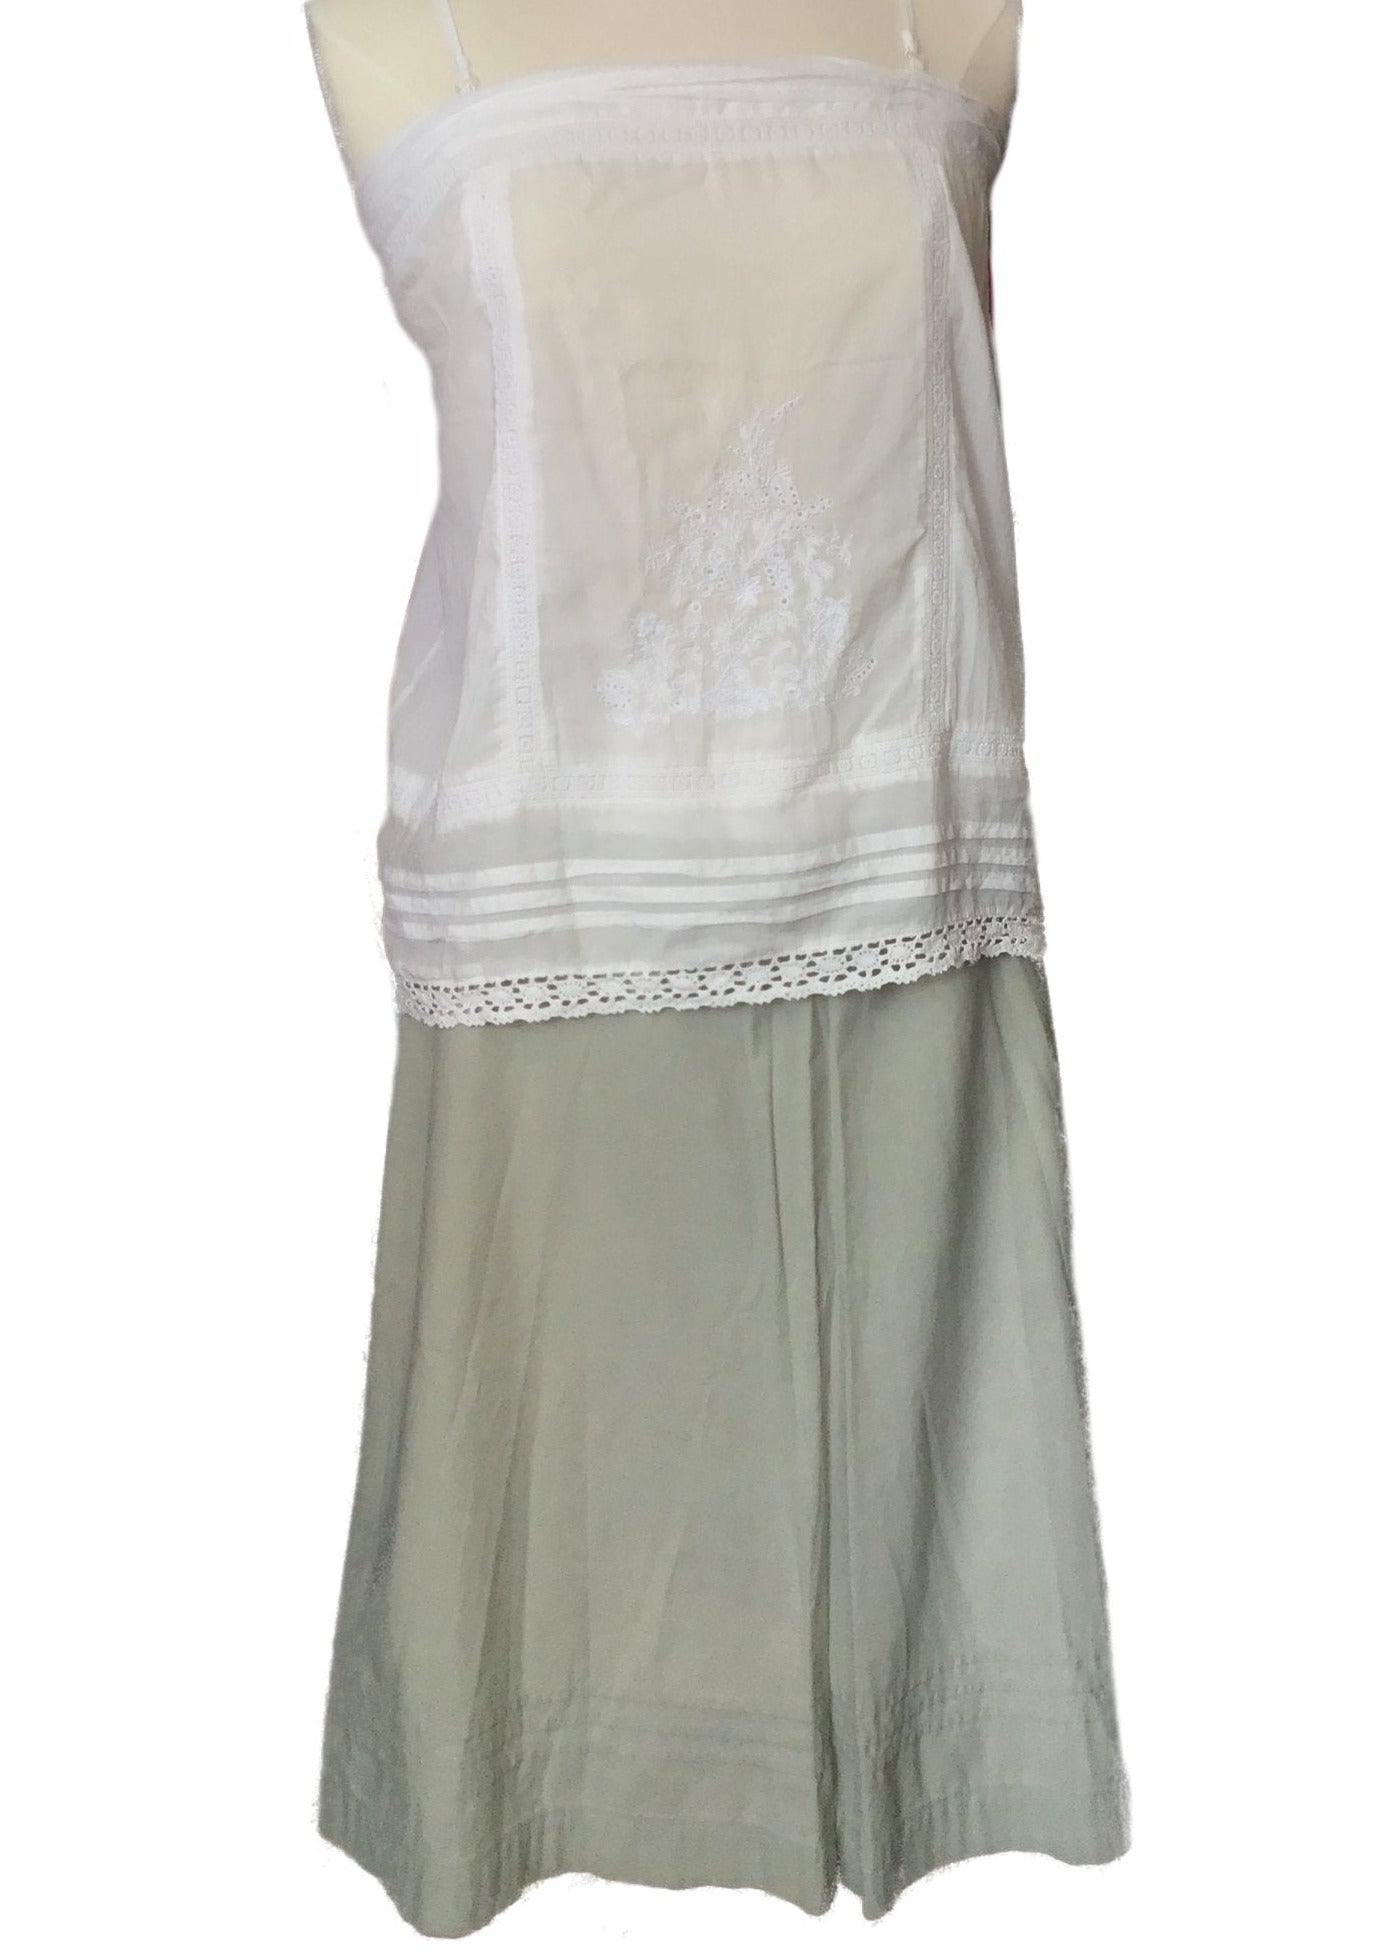 Antique White and Sage Green Linen Under Skirt